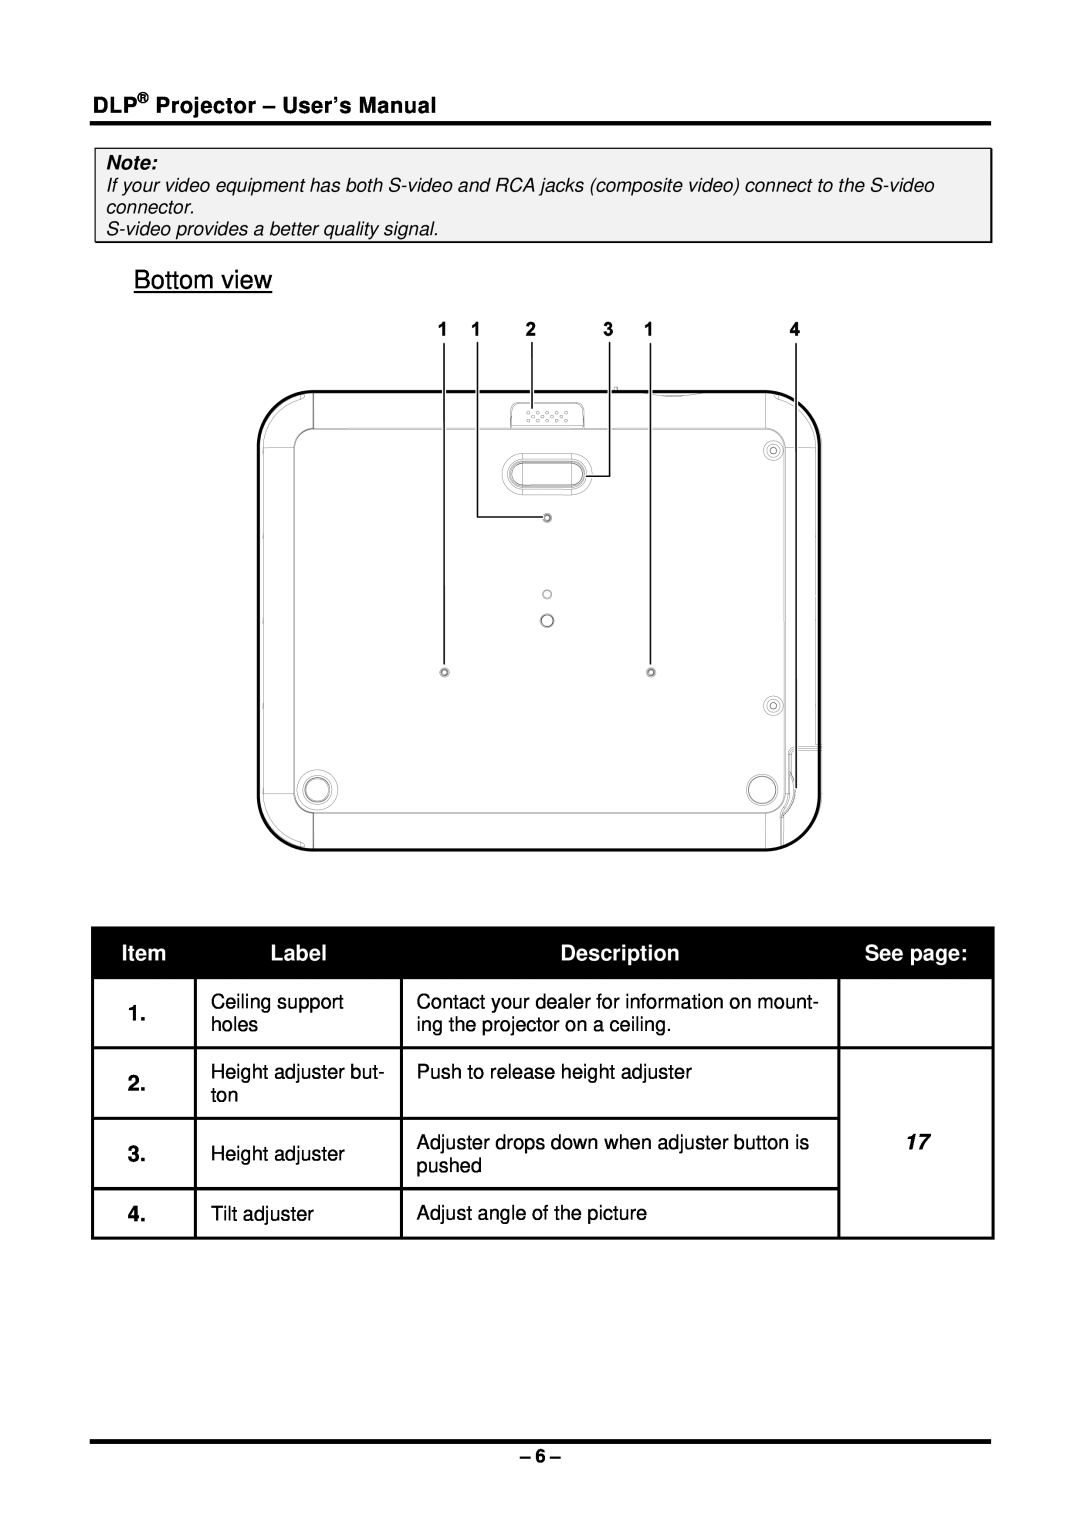 Planar PR5022 manual Bottom view, DLP Projector - User’s Manual, Label, Description, See page 